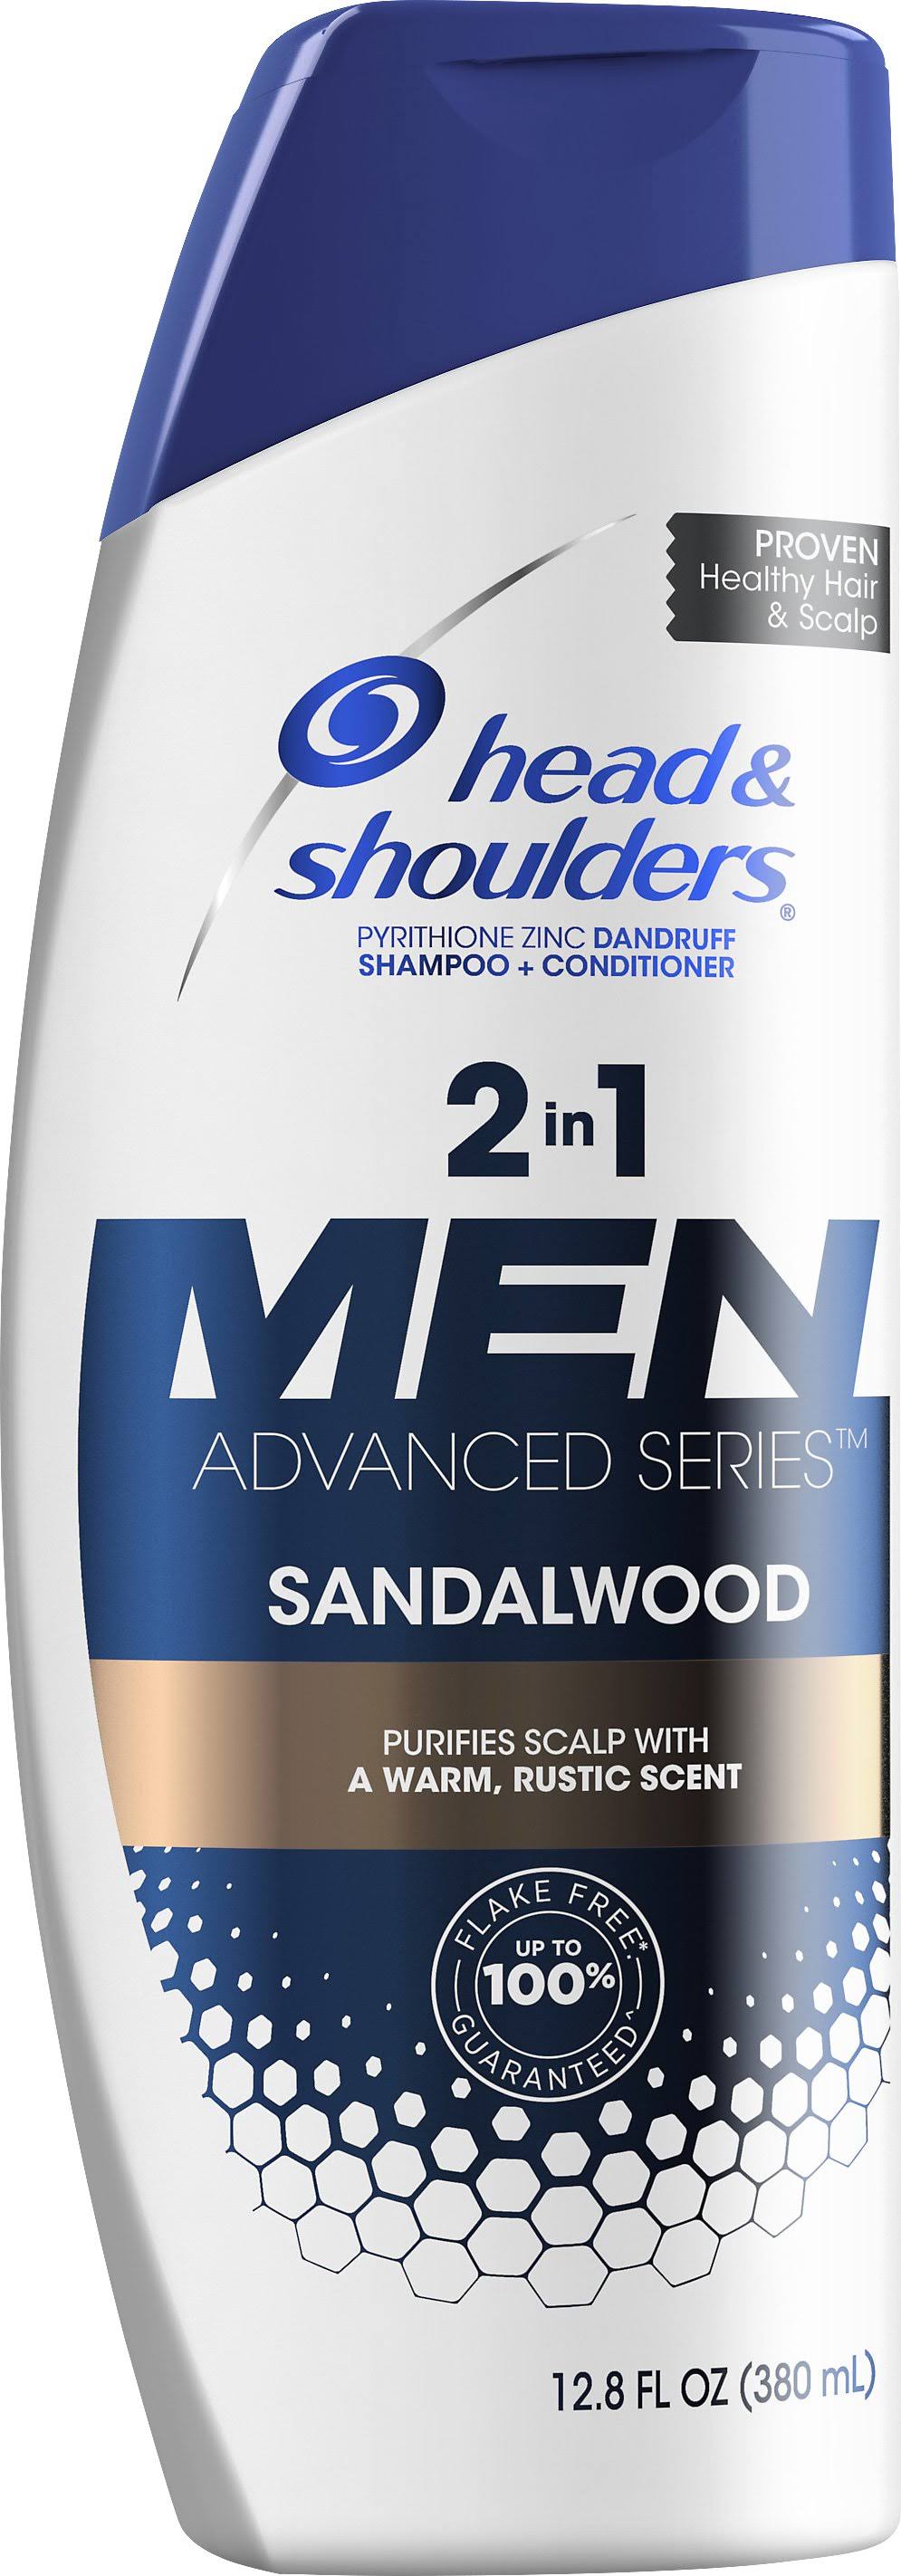 Head & Shoulders Advanced Series Shampoo + Conditioner, Dandruff, Sandalwood, Men, 2 in 1 - 12.8 fl oz